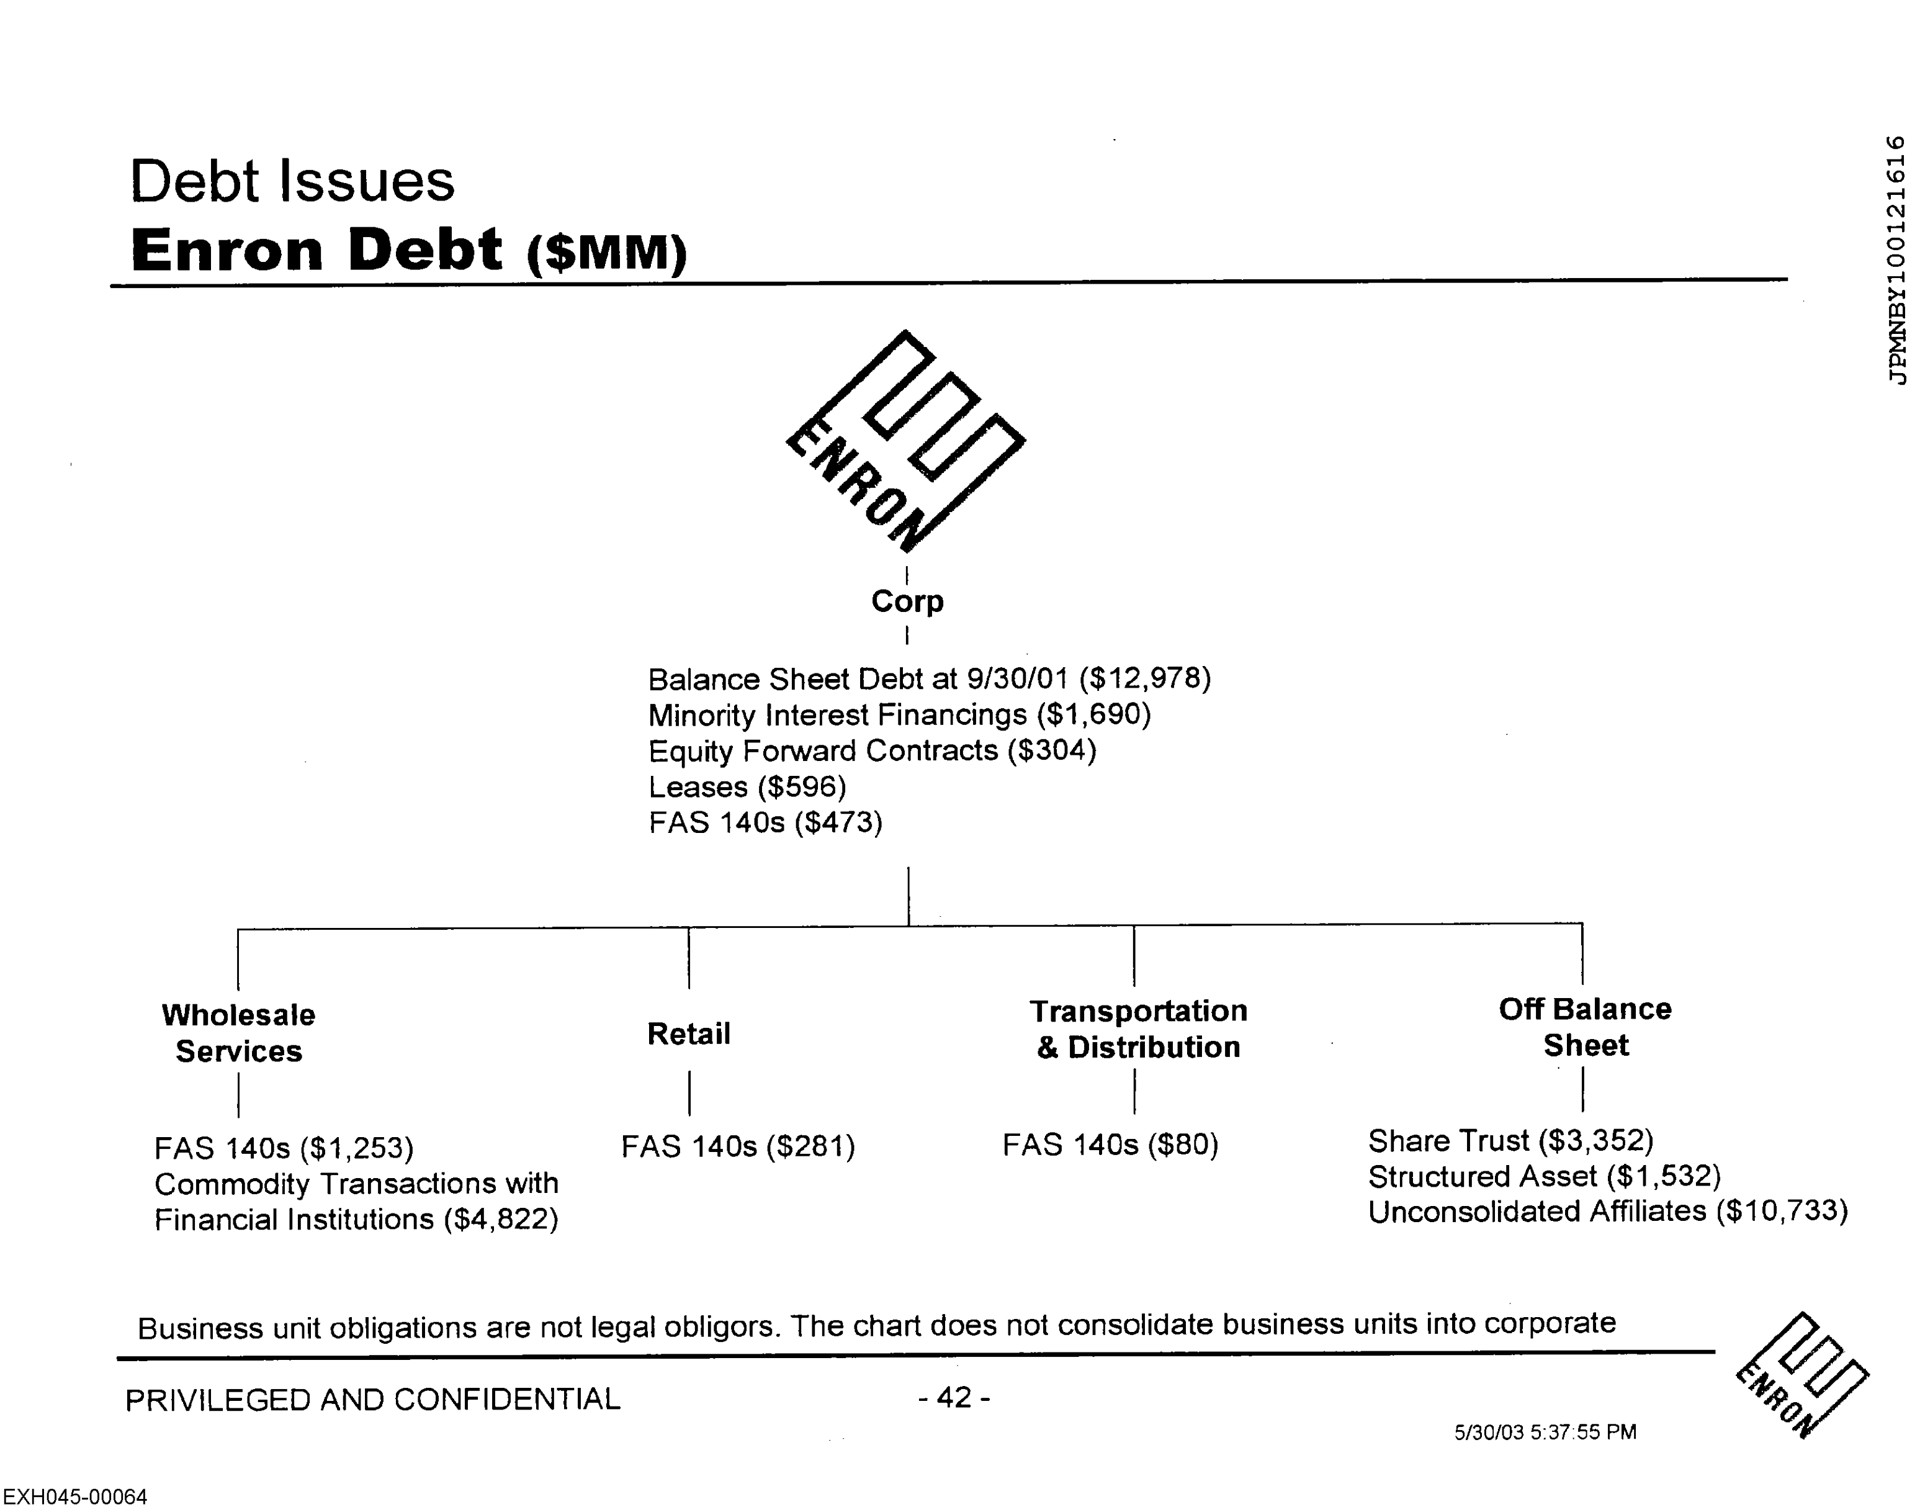 debt issues debt | Enron